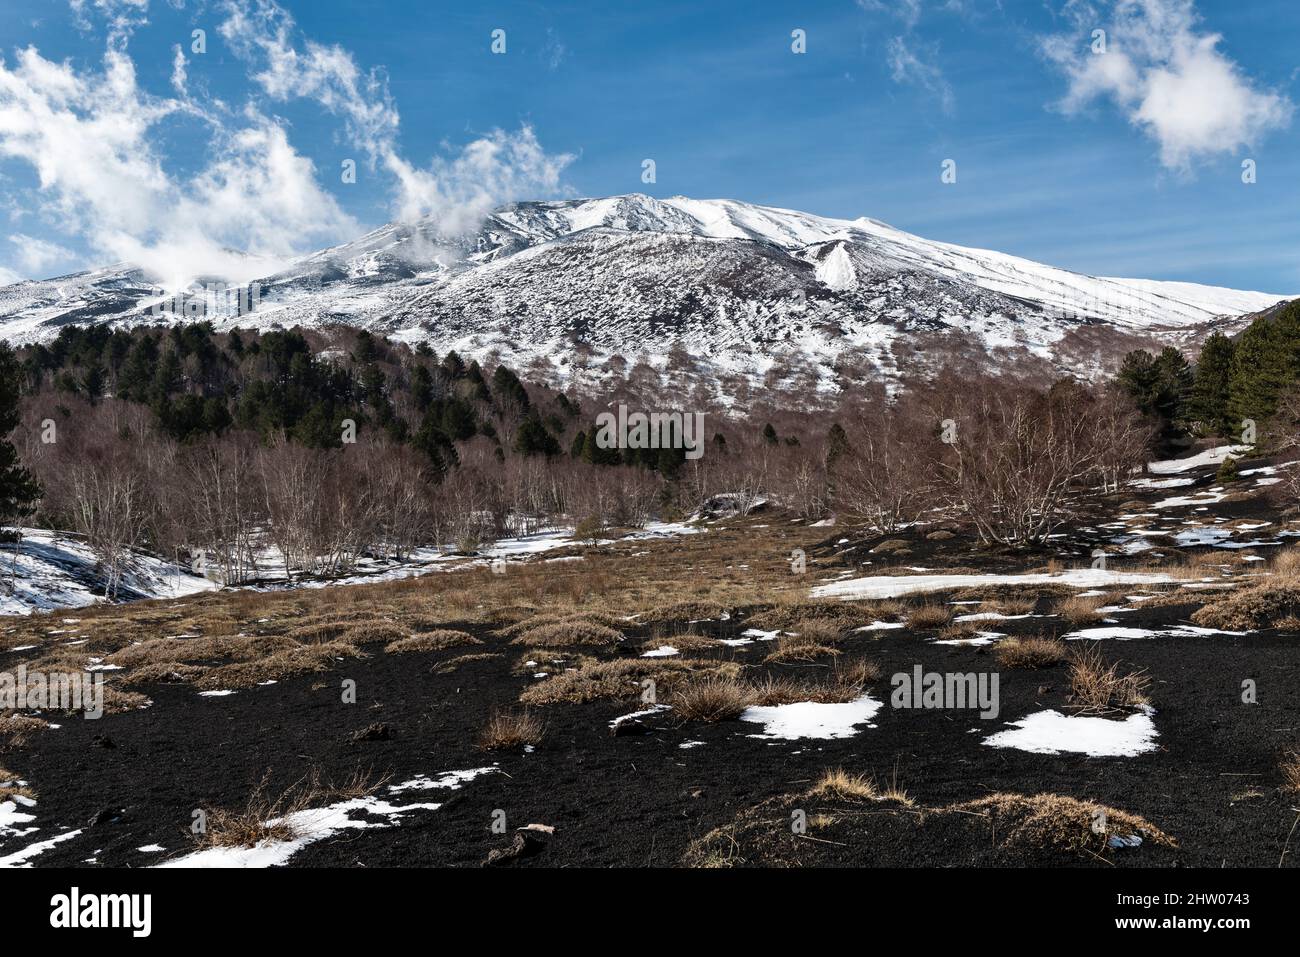 La cumbre del Monte Etna (3357m), Sicilia, Italia, visto a finales de invierno Foto de stock